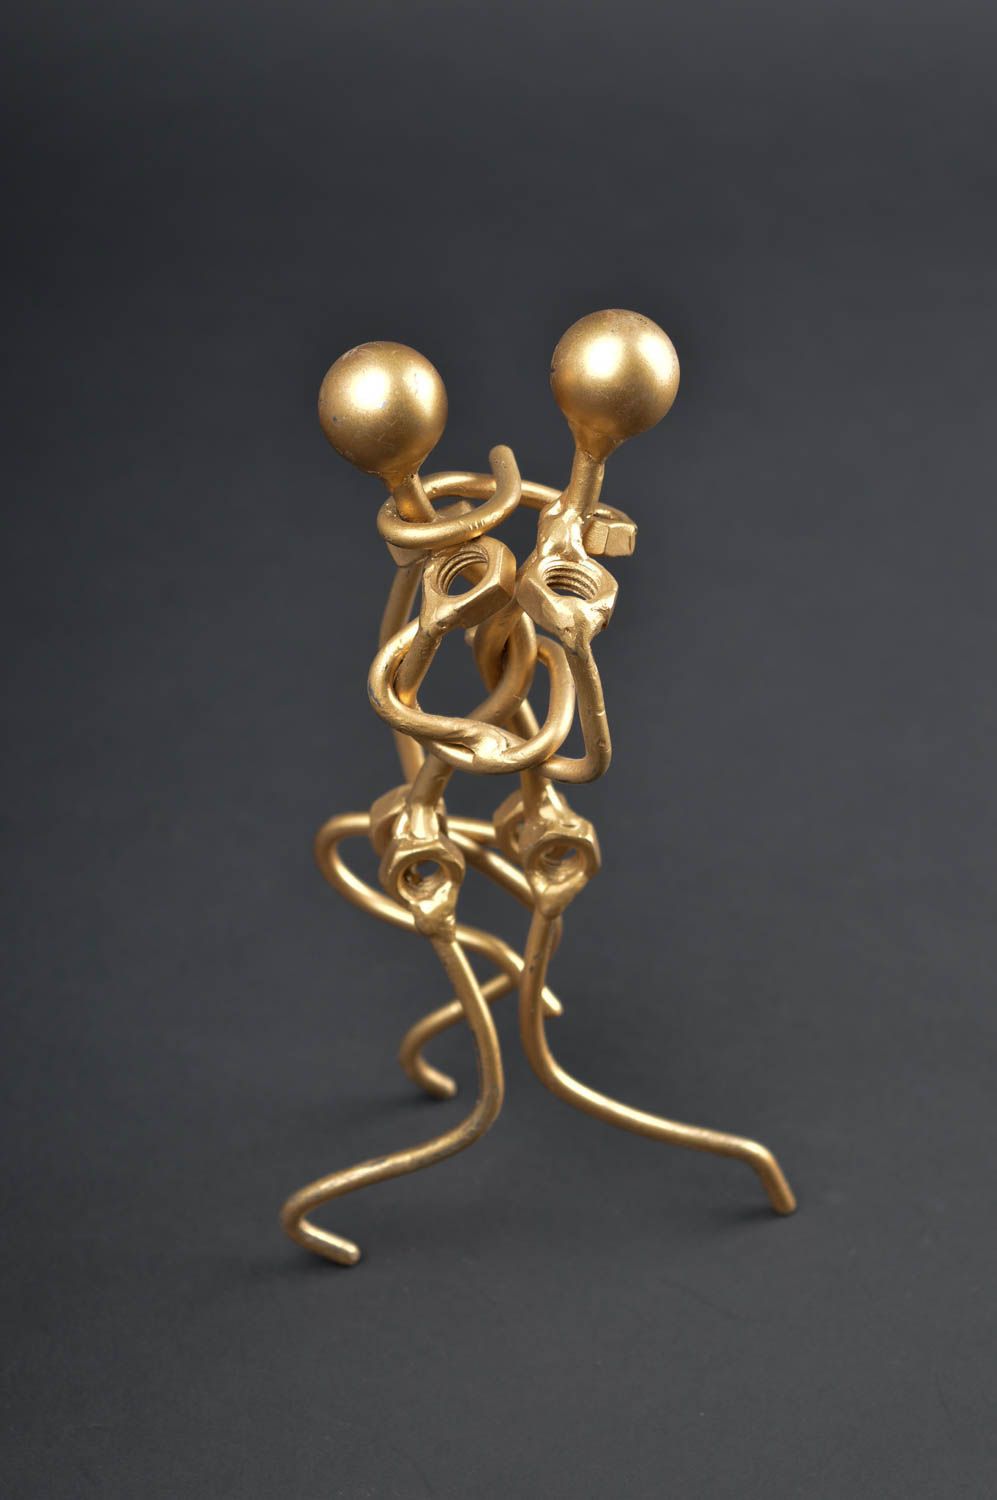 Unusual handmade figurine metal figurines home design decorative use only photo 1